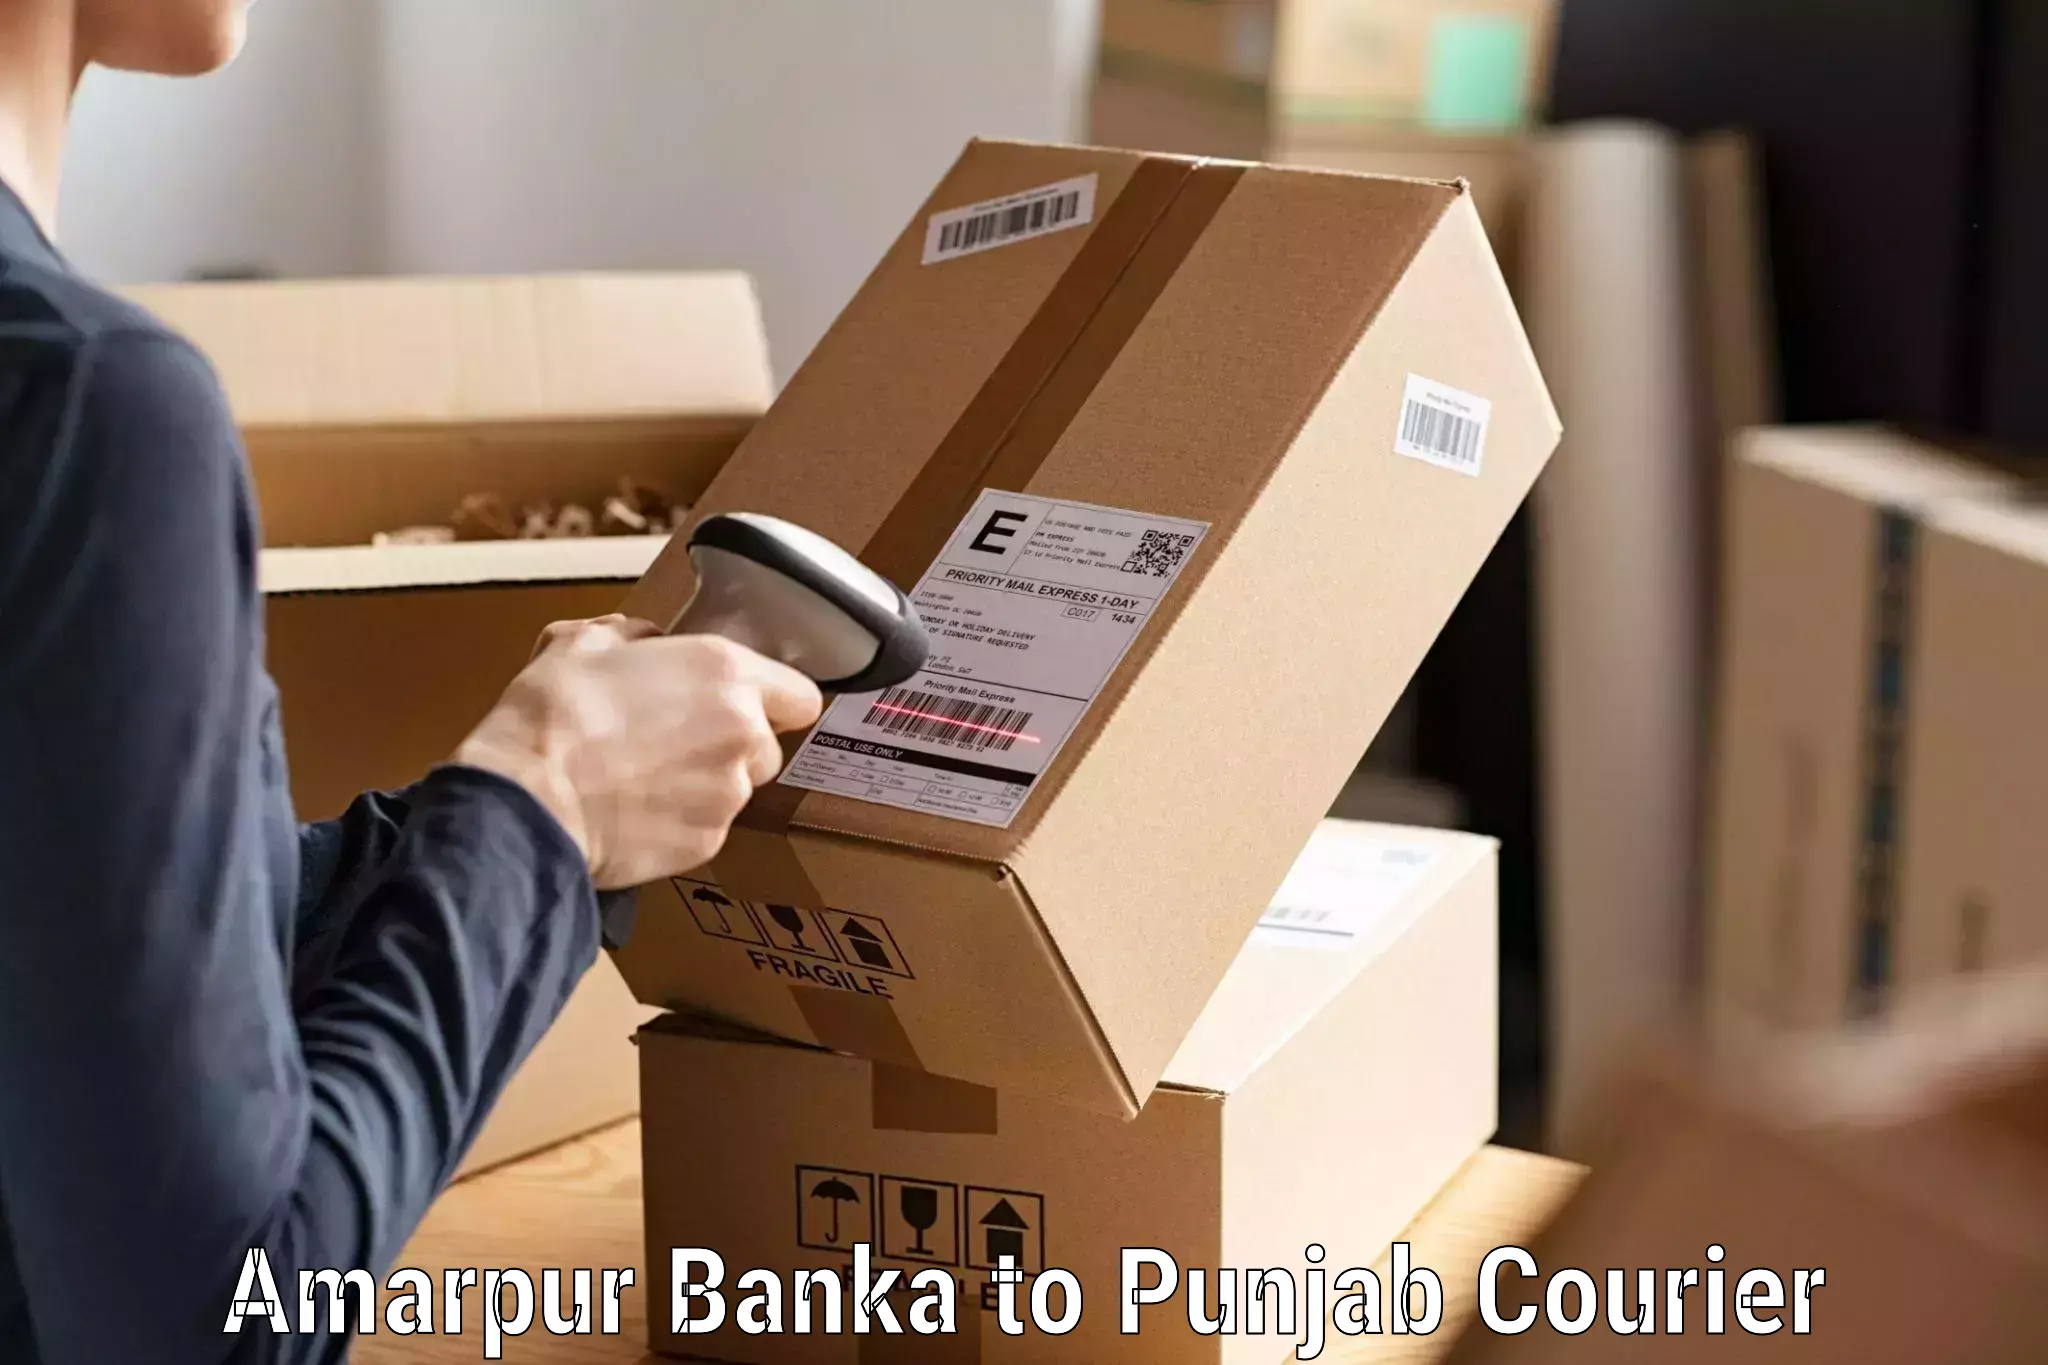 Courier services Amarpur Banka to Batala